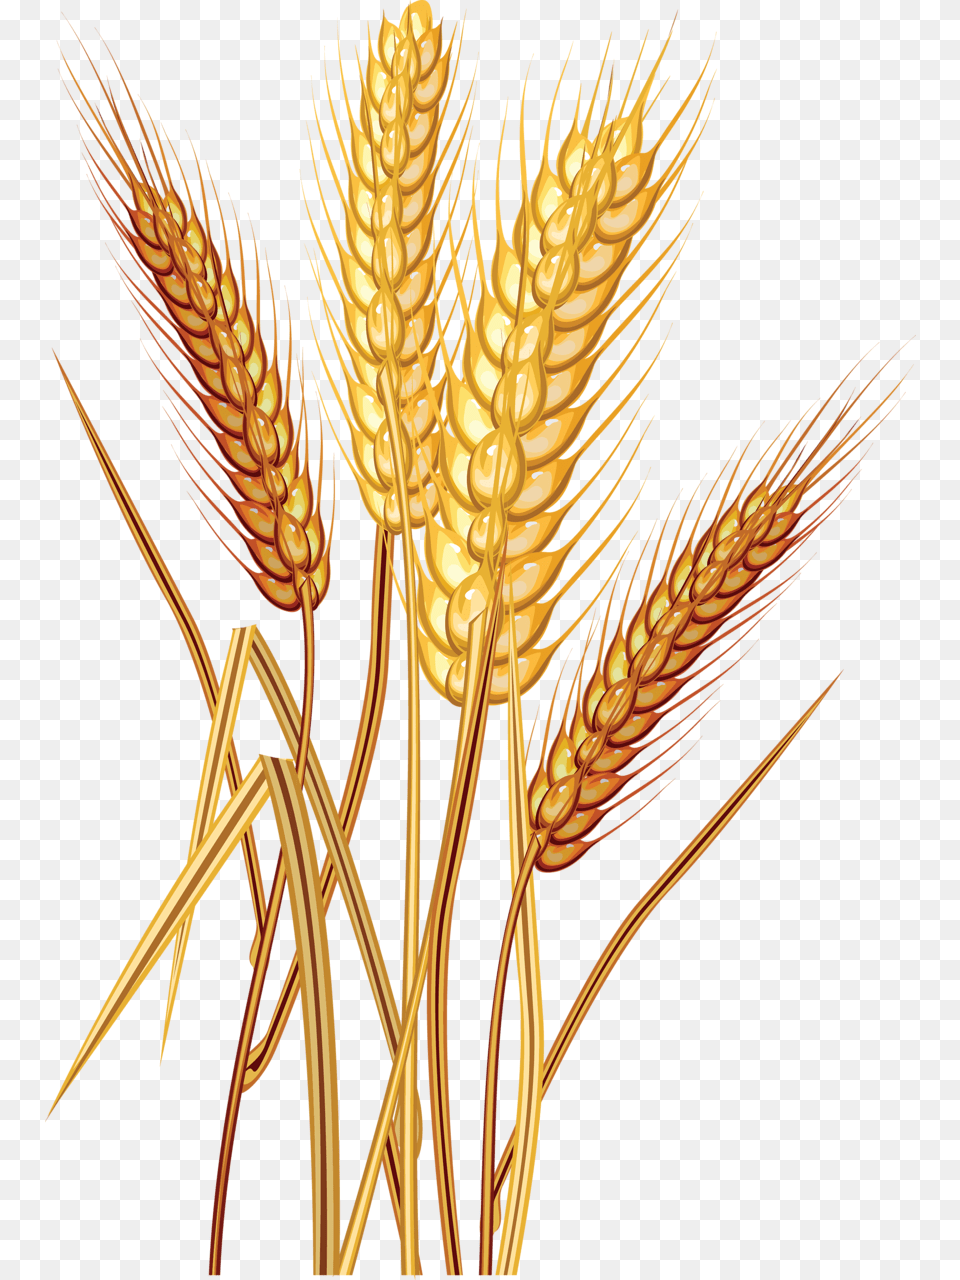 Wheat Images Grain Wheat Clip Art, Food, Produce, Chandelier, Lamp Png Image